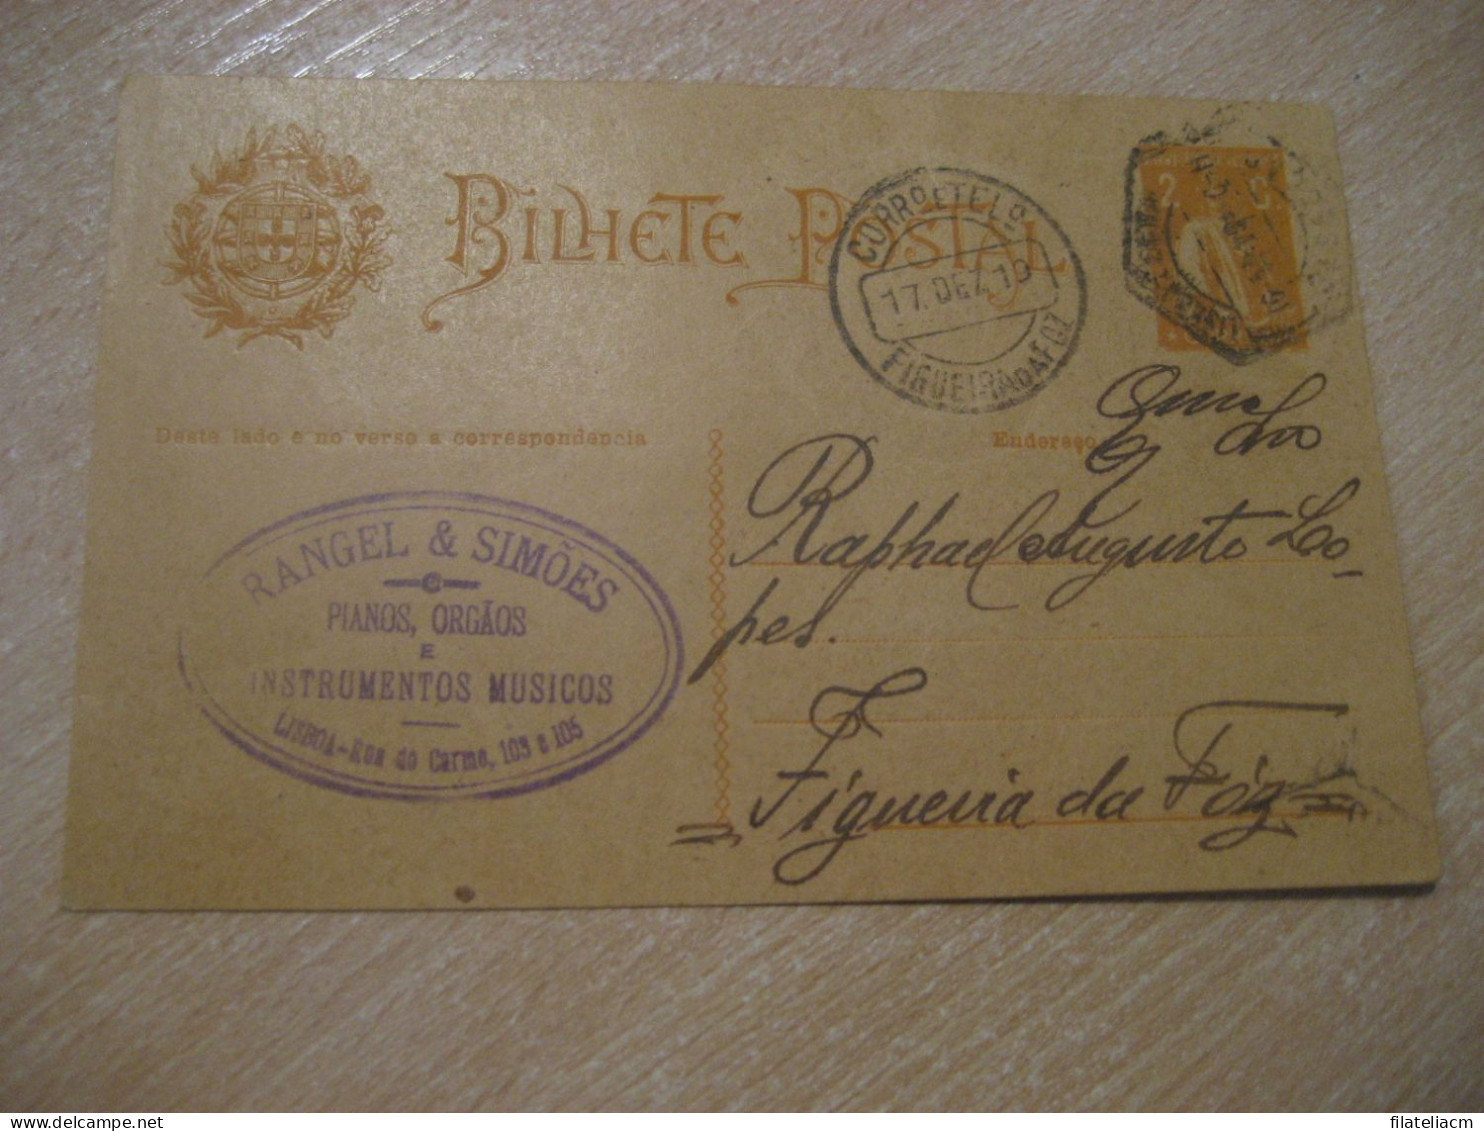 LISBOA Pianos Organos Music Instruments 1919 To Figueira Da Foz Cancel Bilhete Postal Stationery Card PORTUGAL - Lettres & Documents